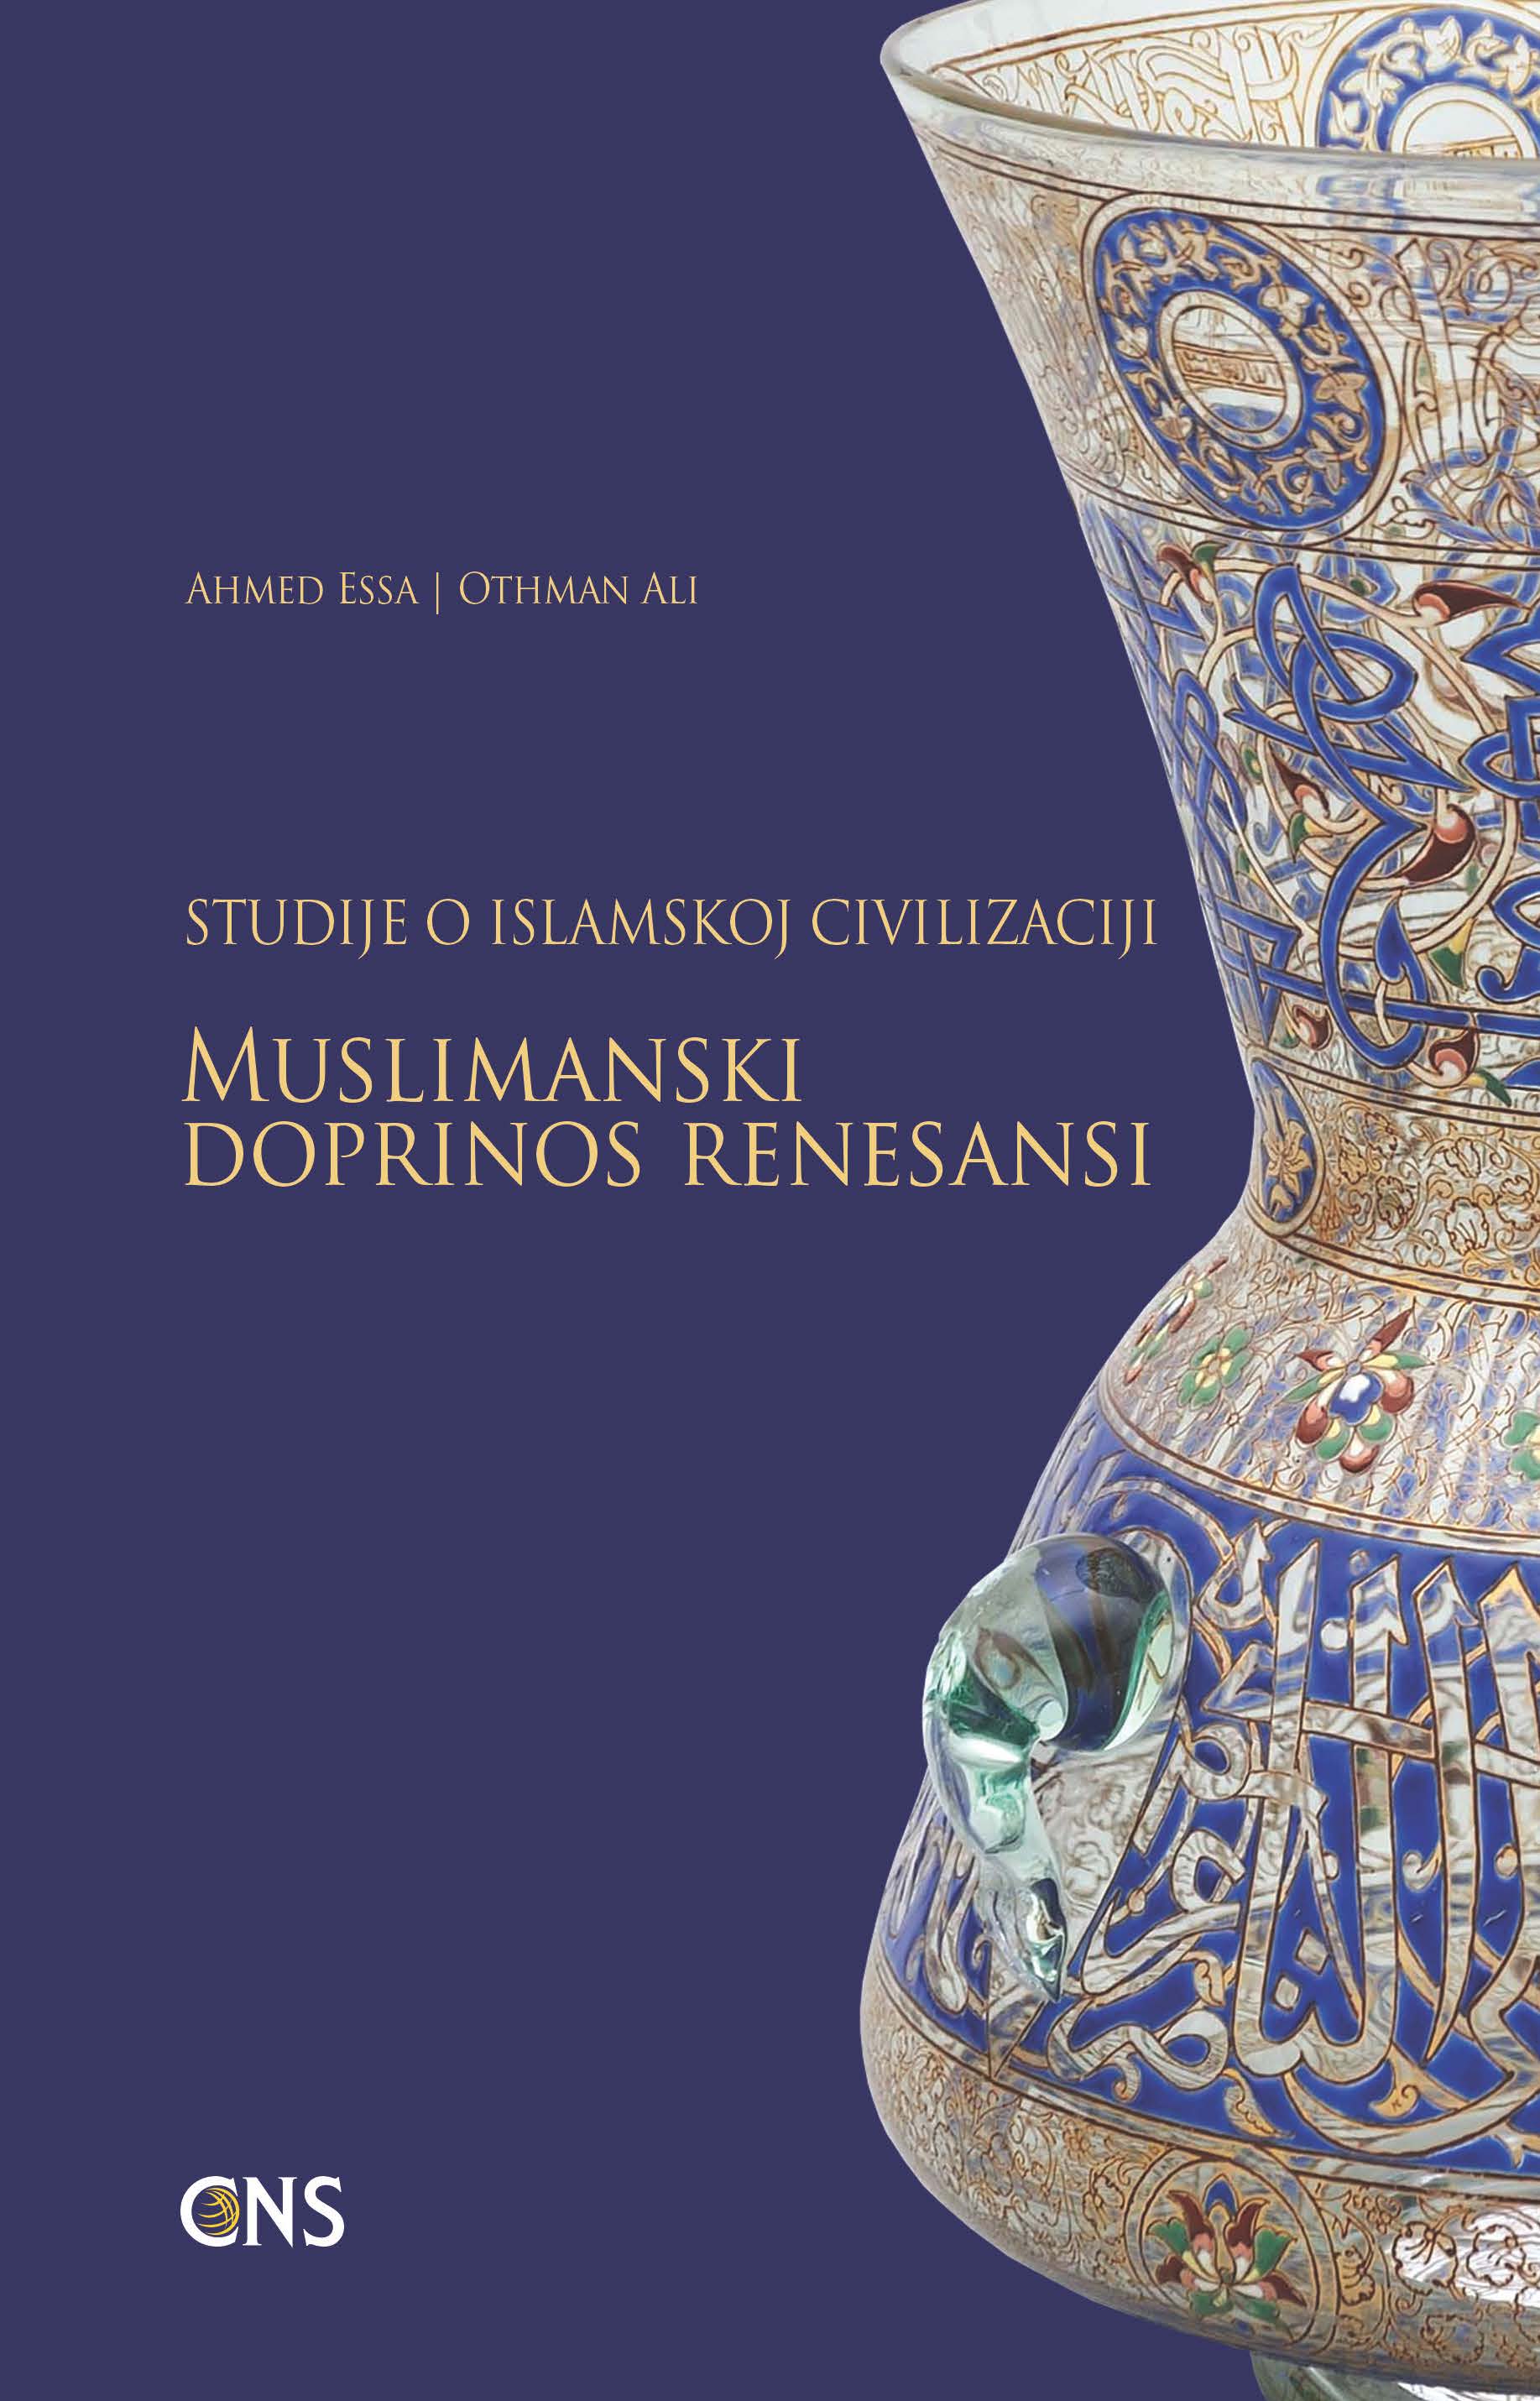 (Bosnian Language) STUDIJE O ISLAMSKOJ CIVILIZACIJI MUSLIMANSKI DOPRINOS RENESANSI (Studies in Islamic Civilization: The Muslim Contribution to the Renaissance)